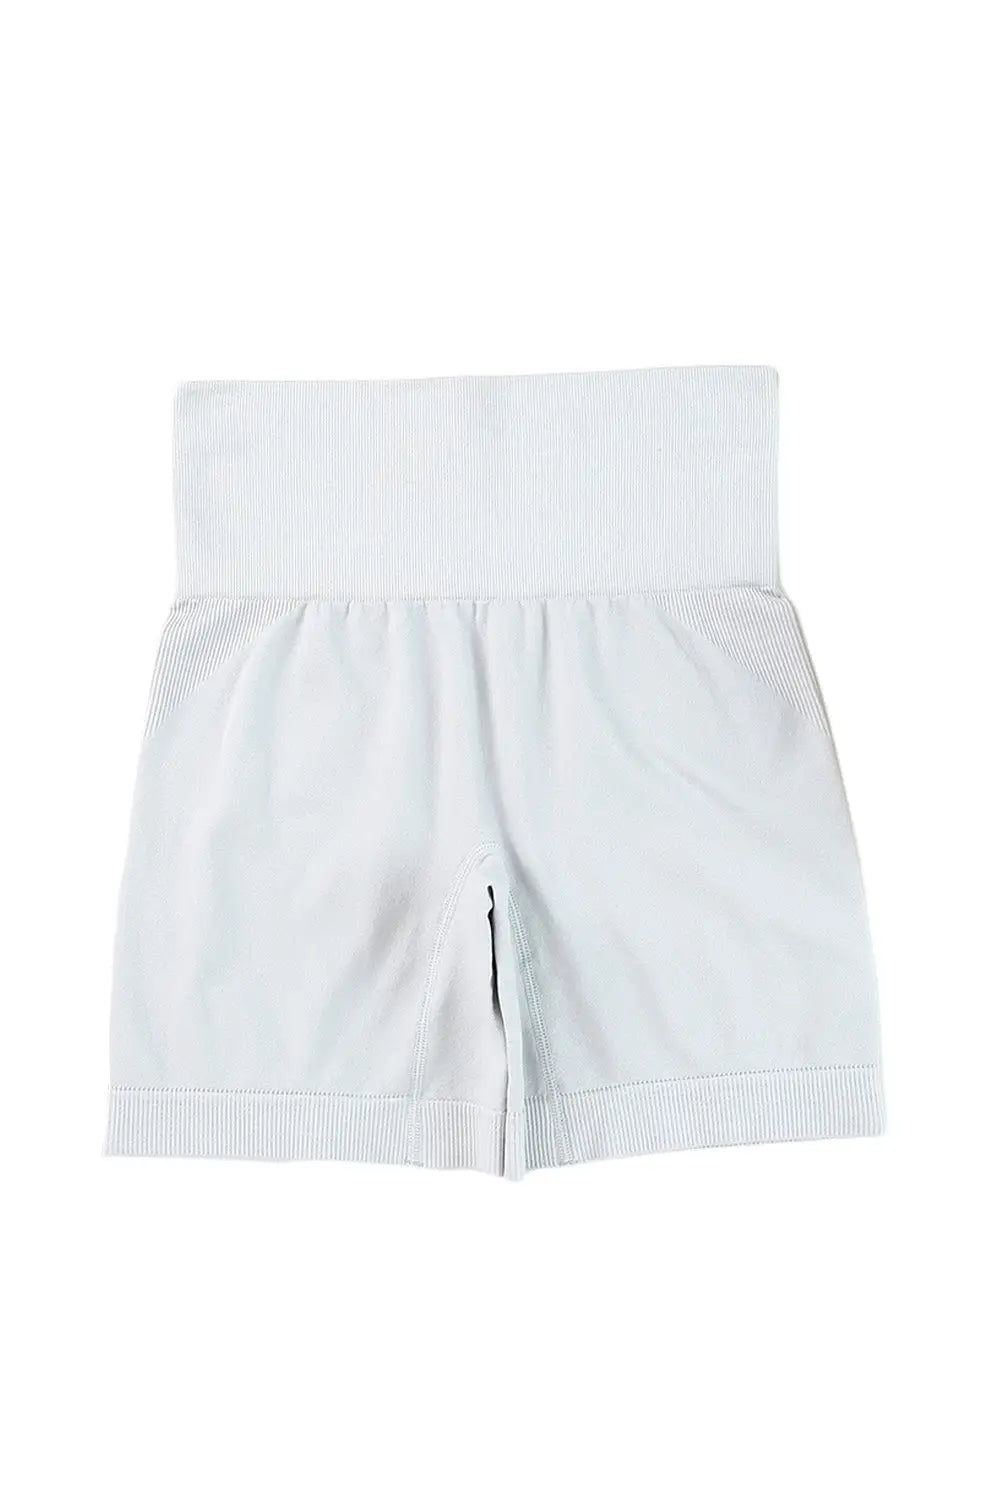 Gray ribbed elastic high waist seamless sports shorts -